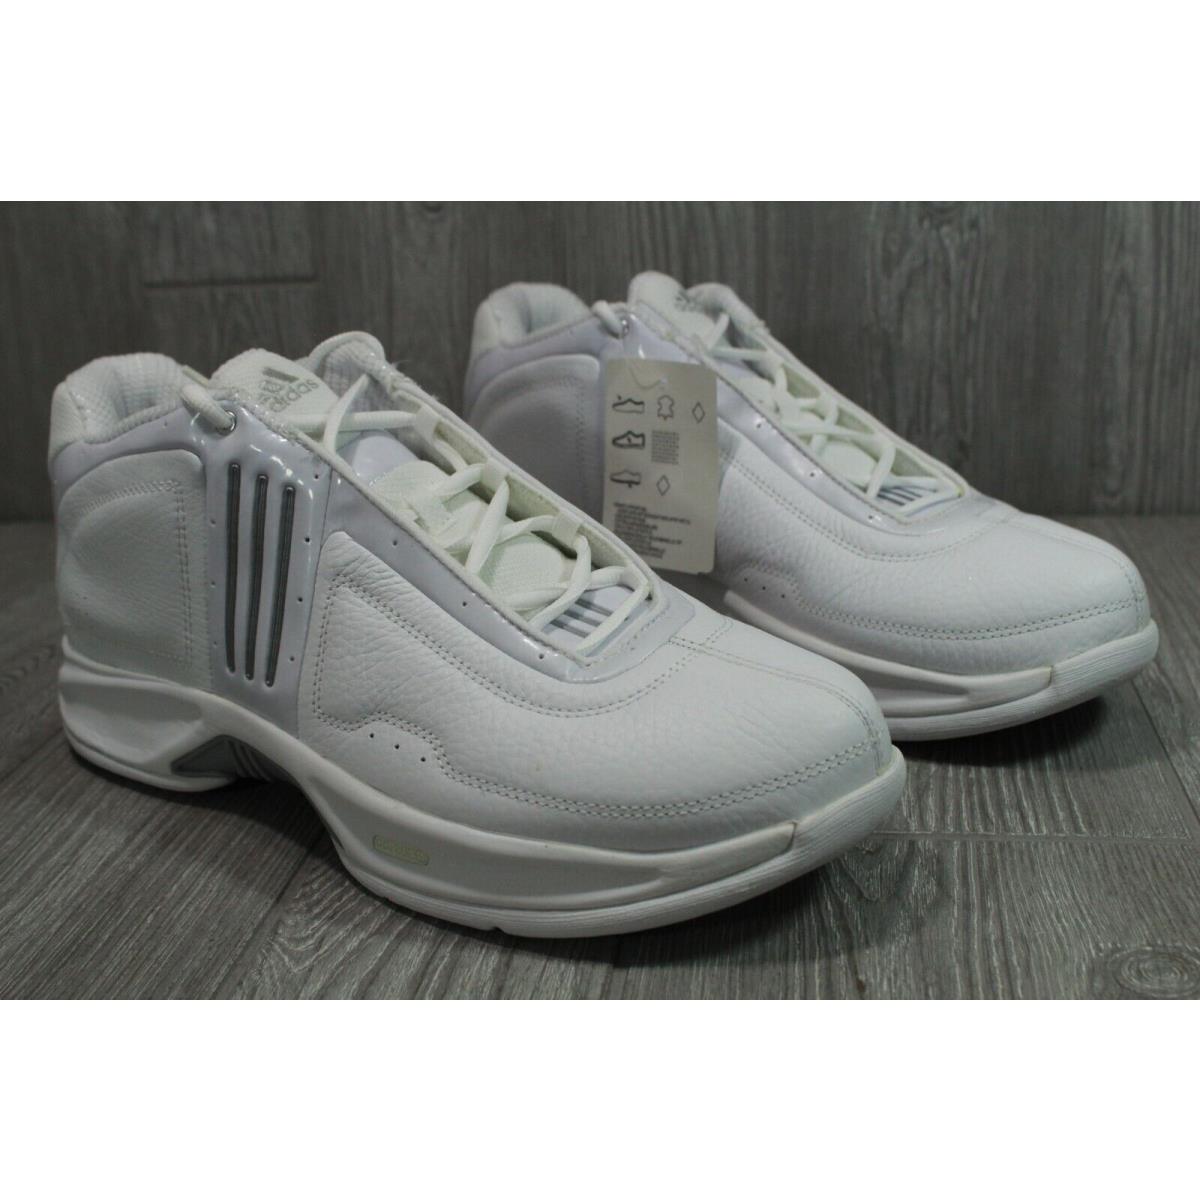 Adidas shoes Vintage - White 1